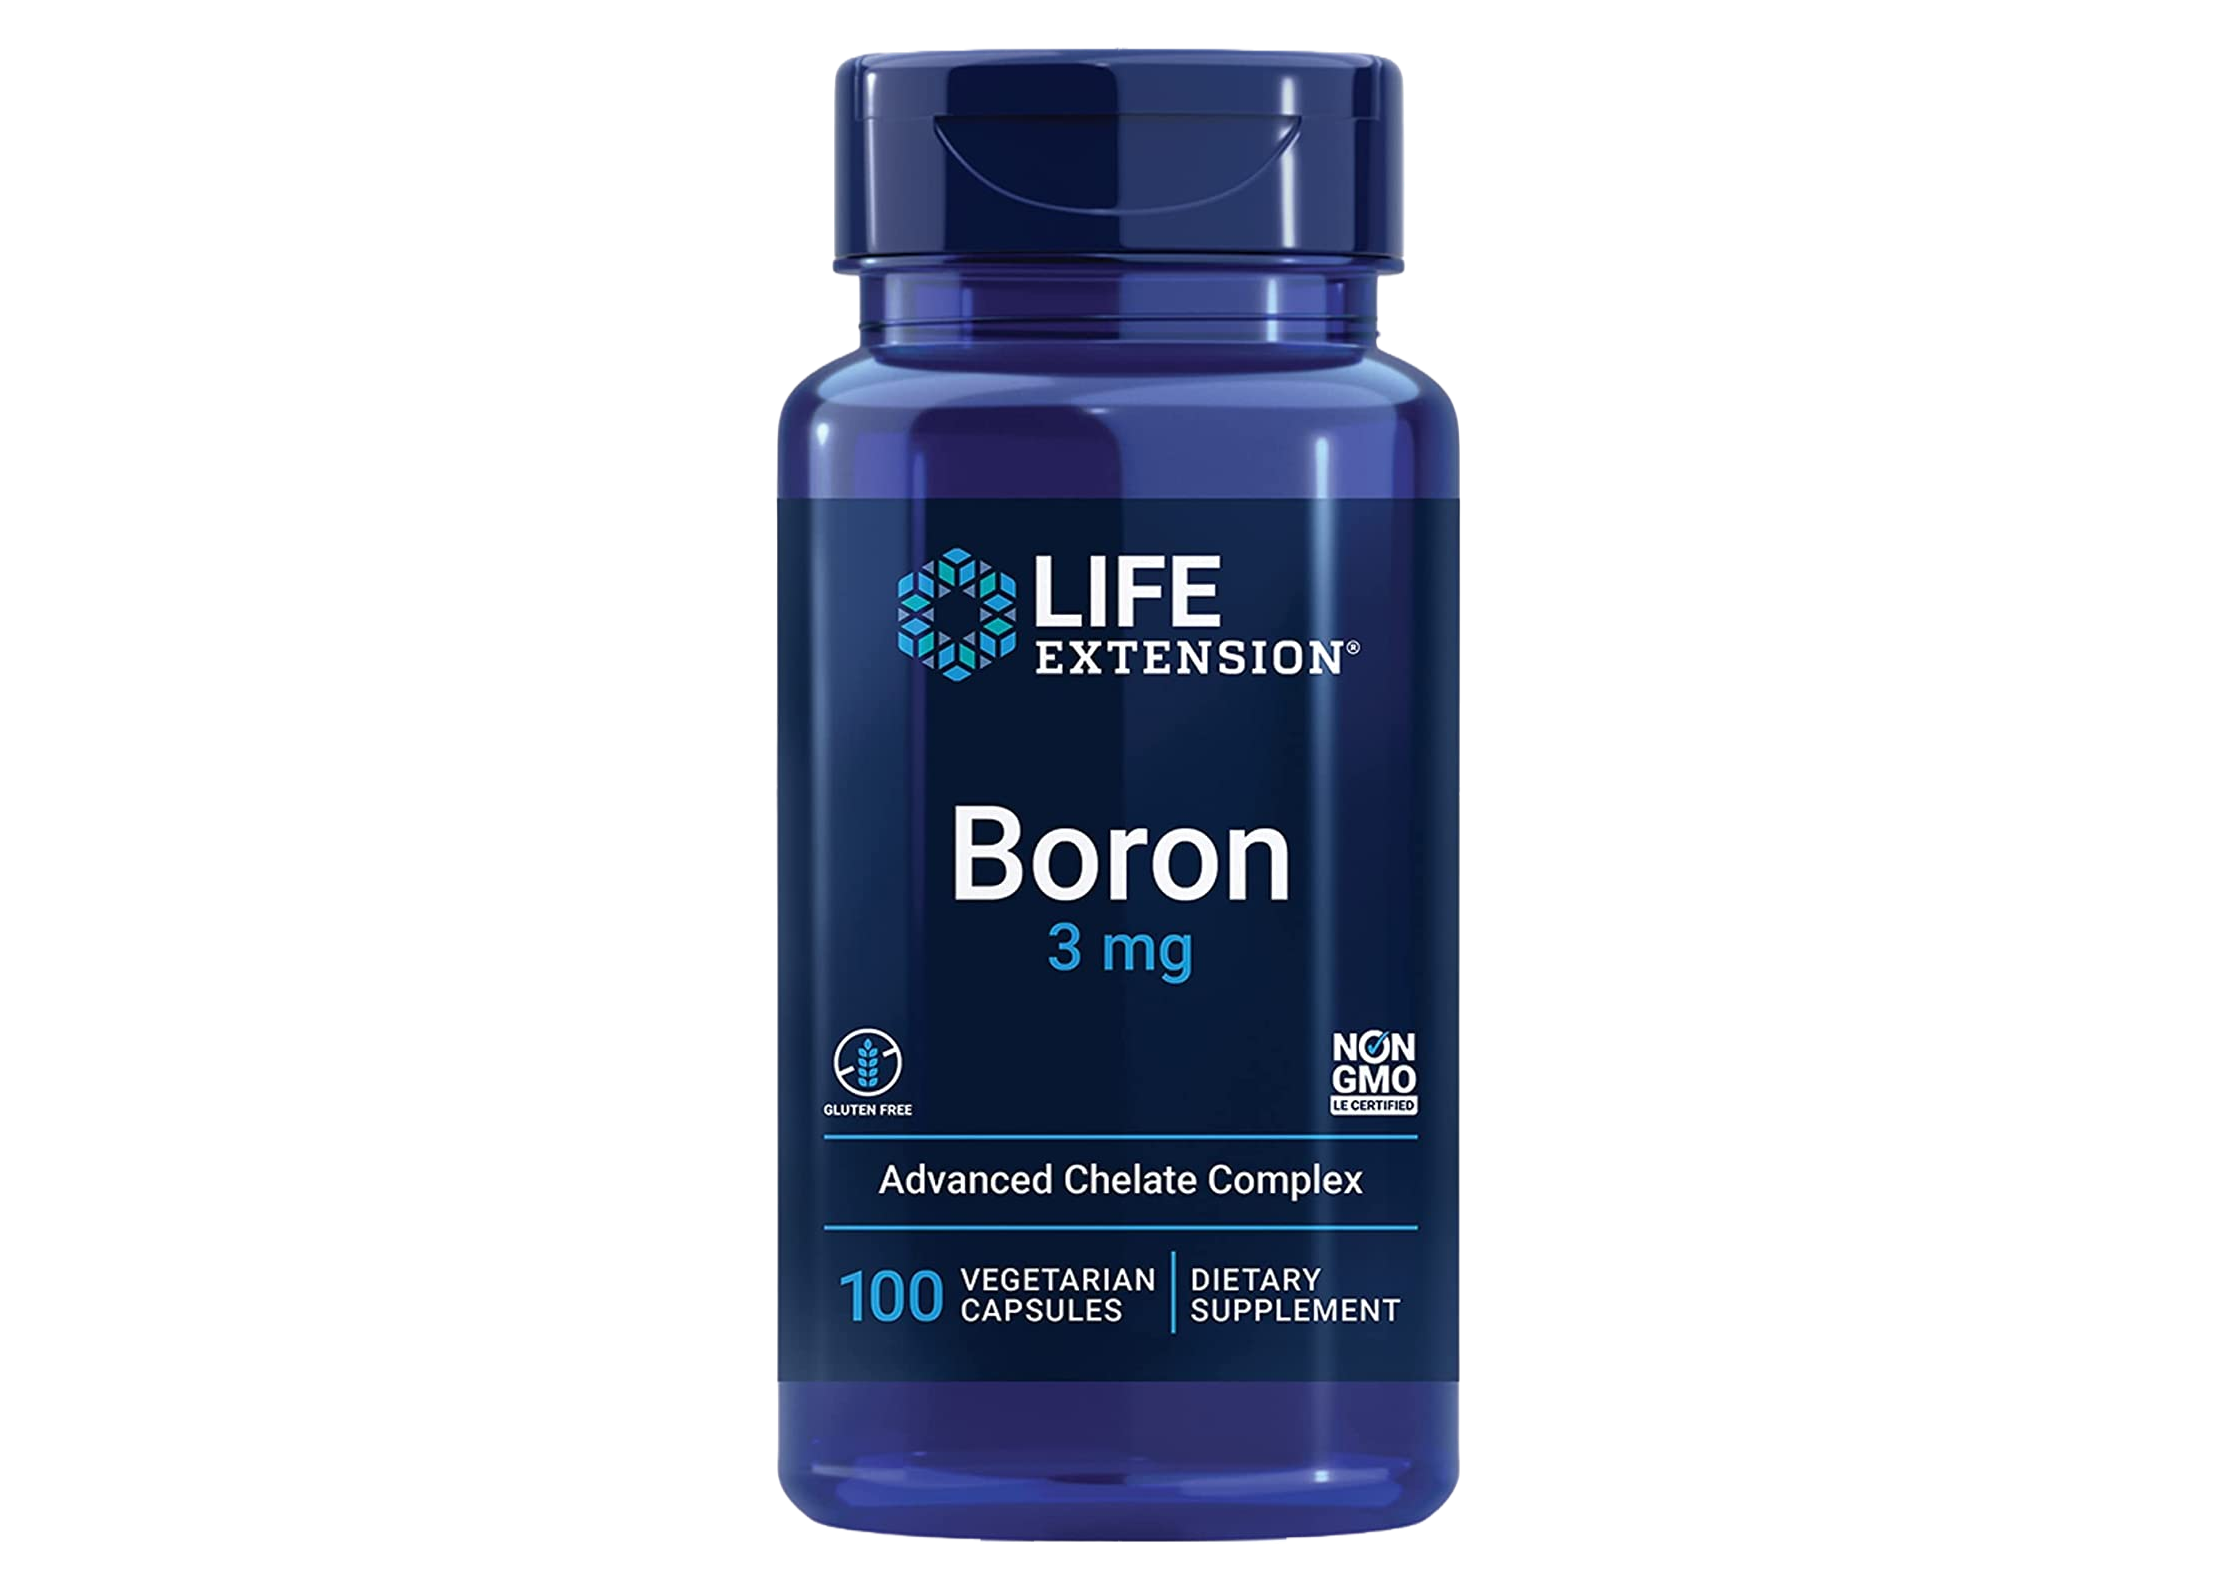 Life Extension Boron Supplement